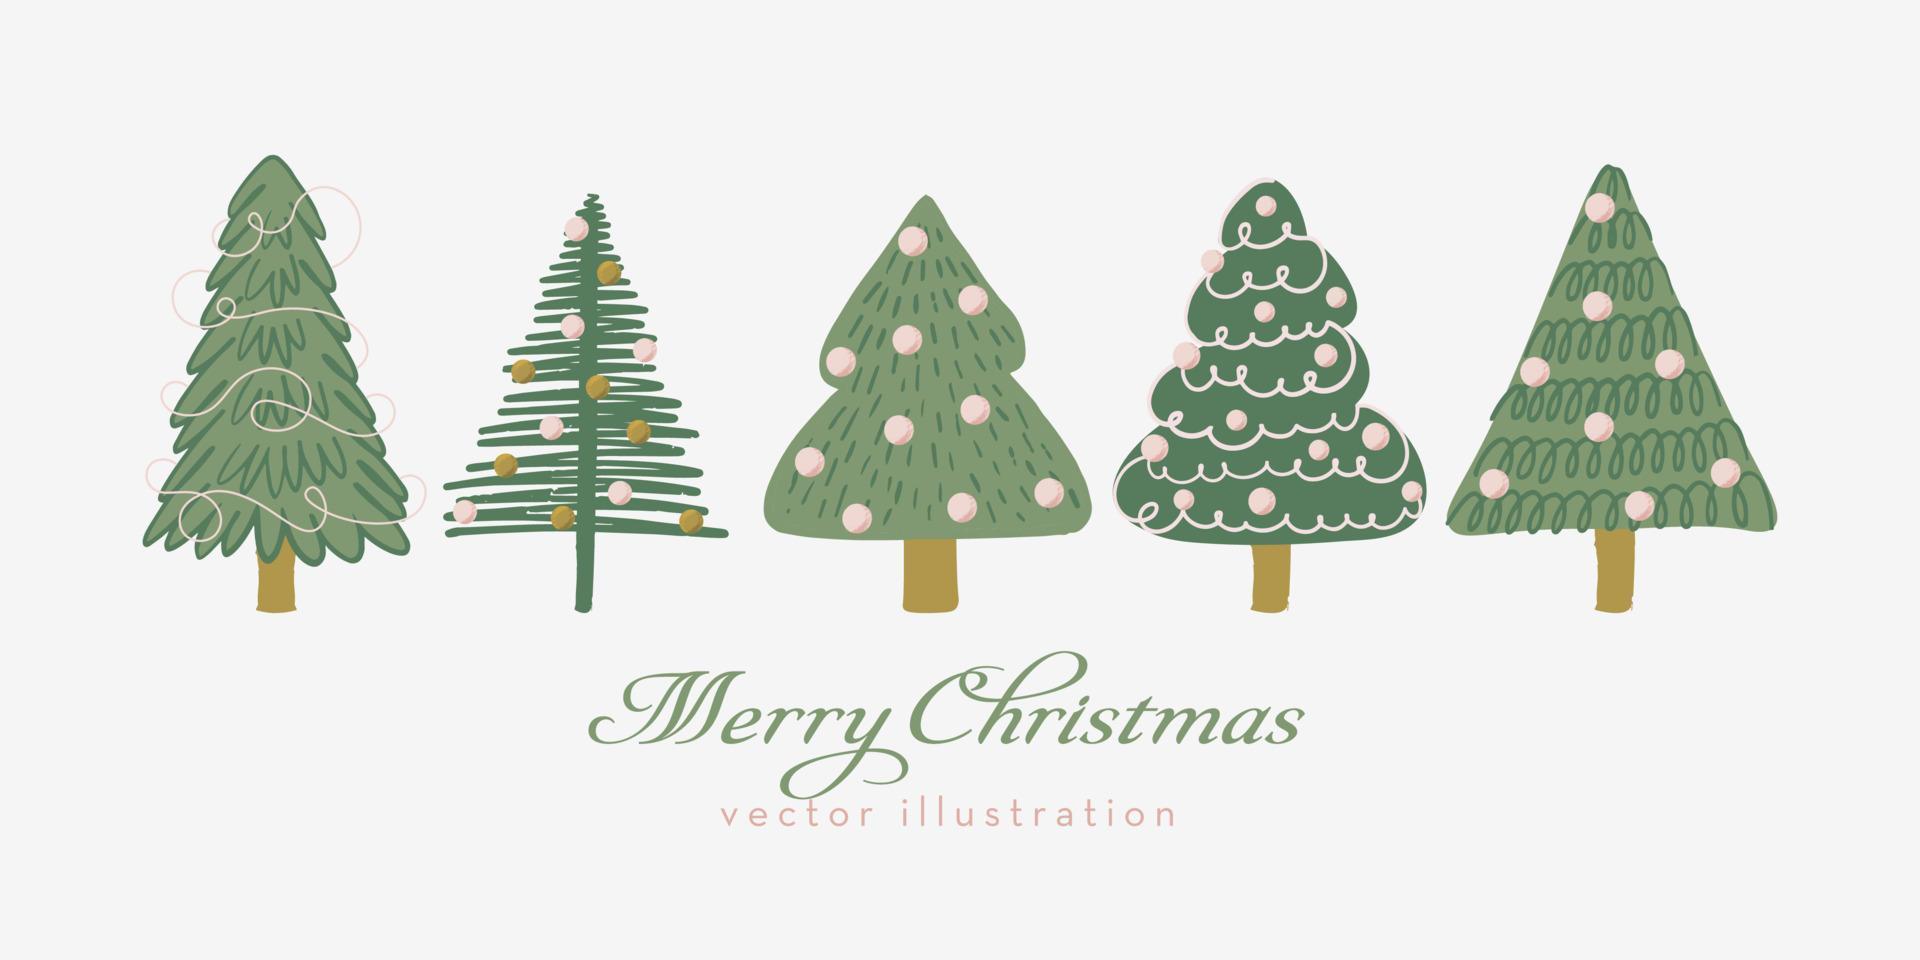 árbol decorado con navidad, abeto o pino. ilustración vectorial en estilo garabato dibujado a mano vector